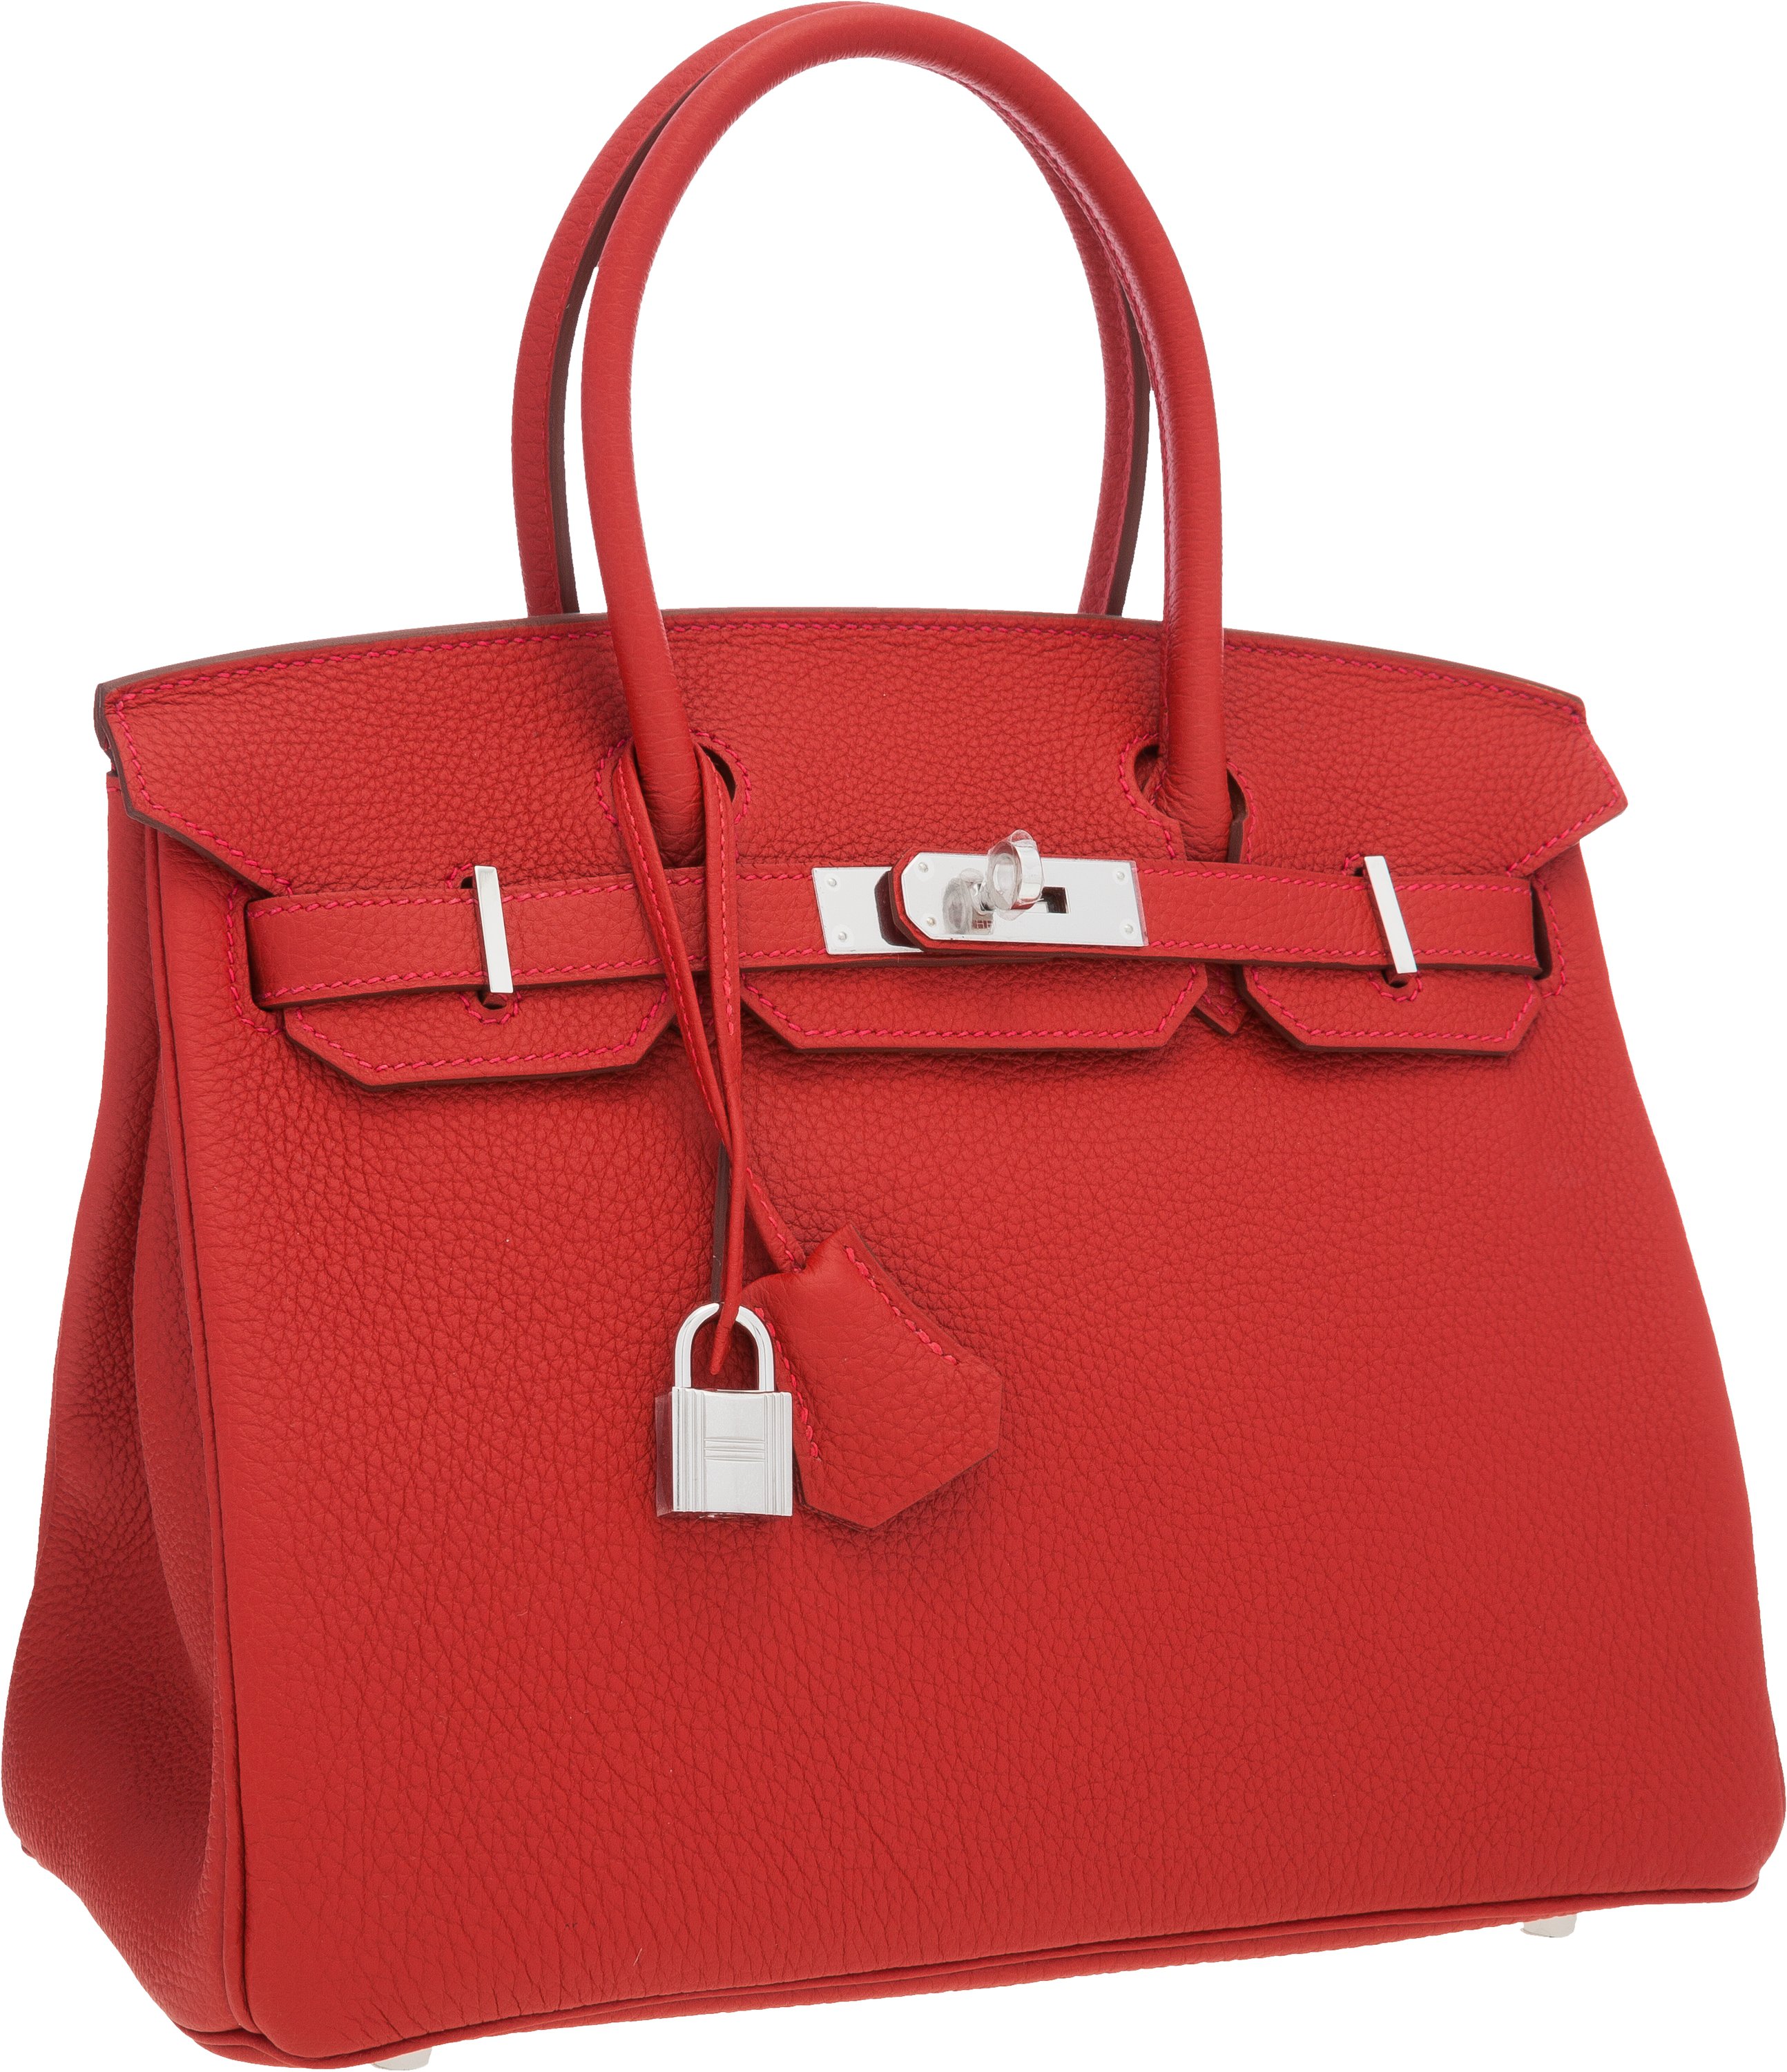 Hermes 30cm Rouge Casaque Togo Leather Birkin Bag with Palladium